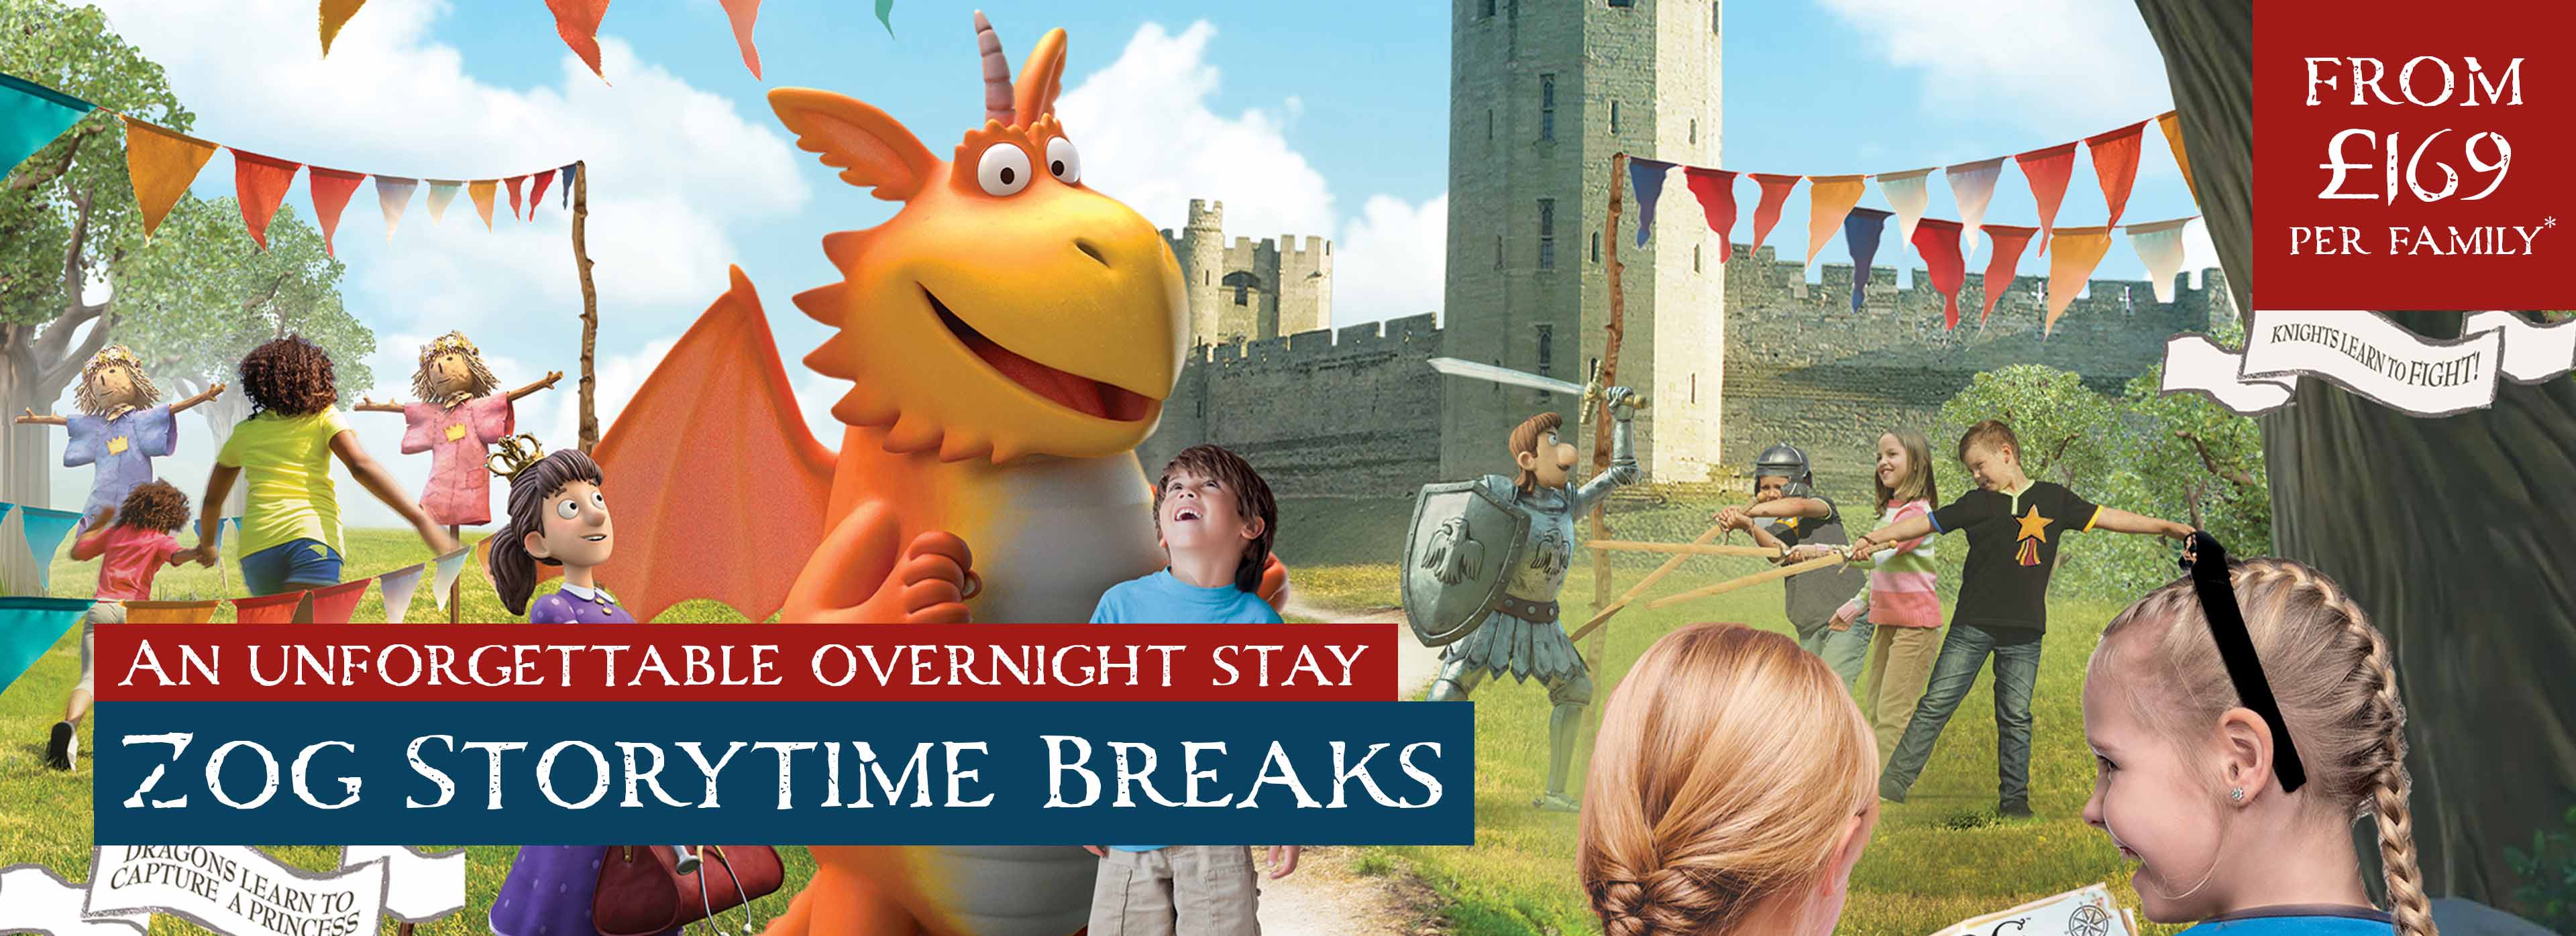 Zog Storytime short breaks at Warwick Castle